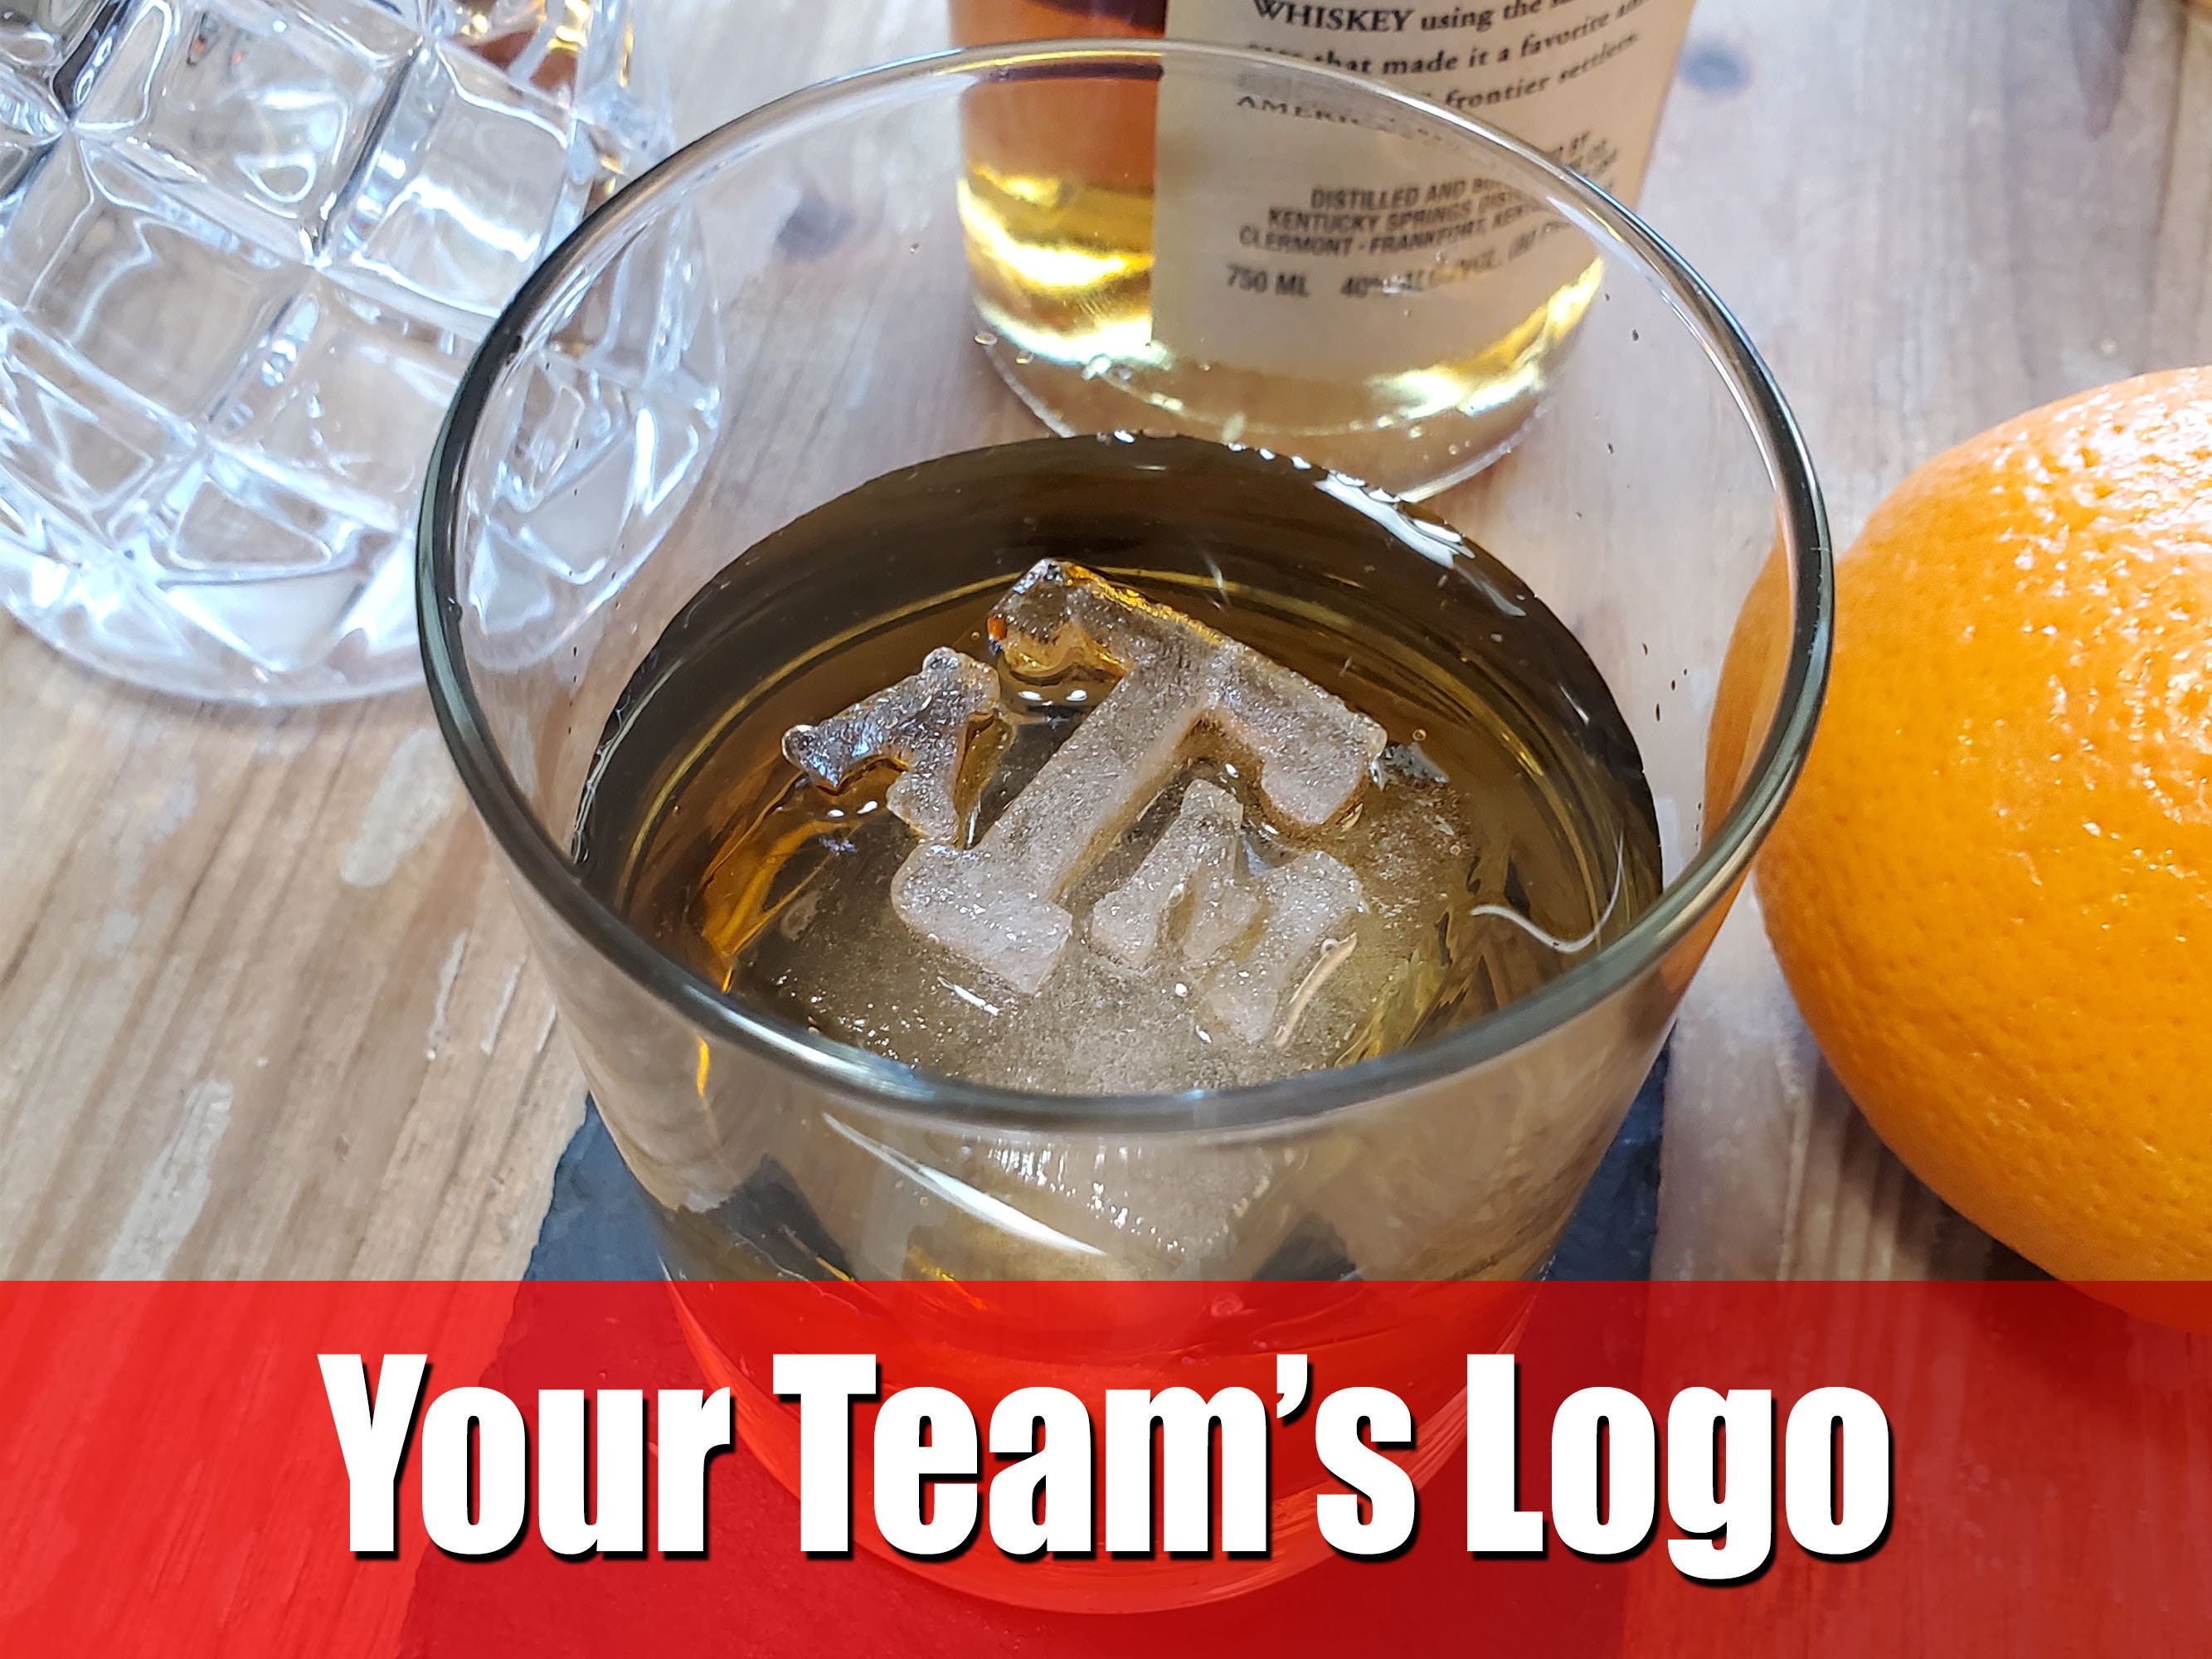 College football whiskey ice mold, Custom college logo whiskey ice cub –  Speakeasy Ice Molds